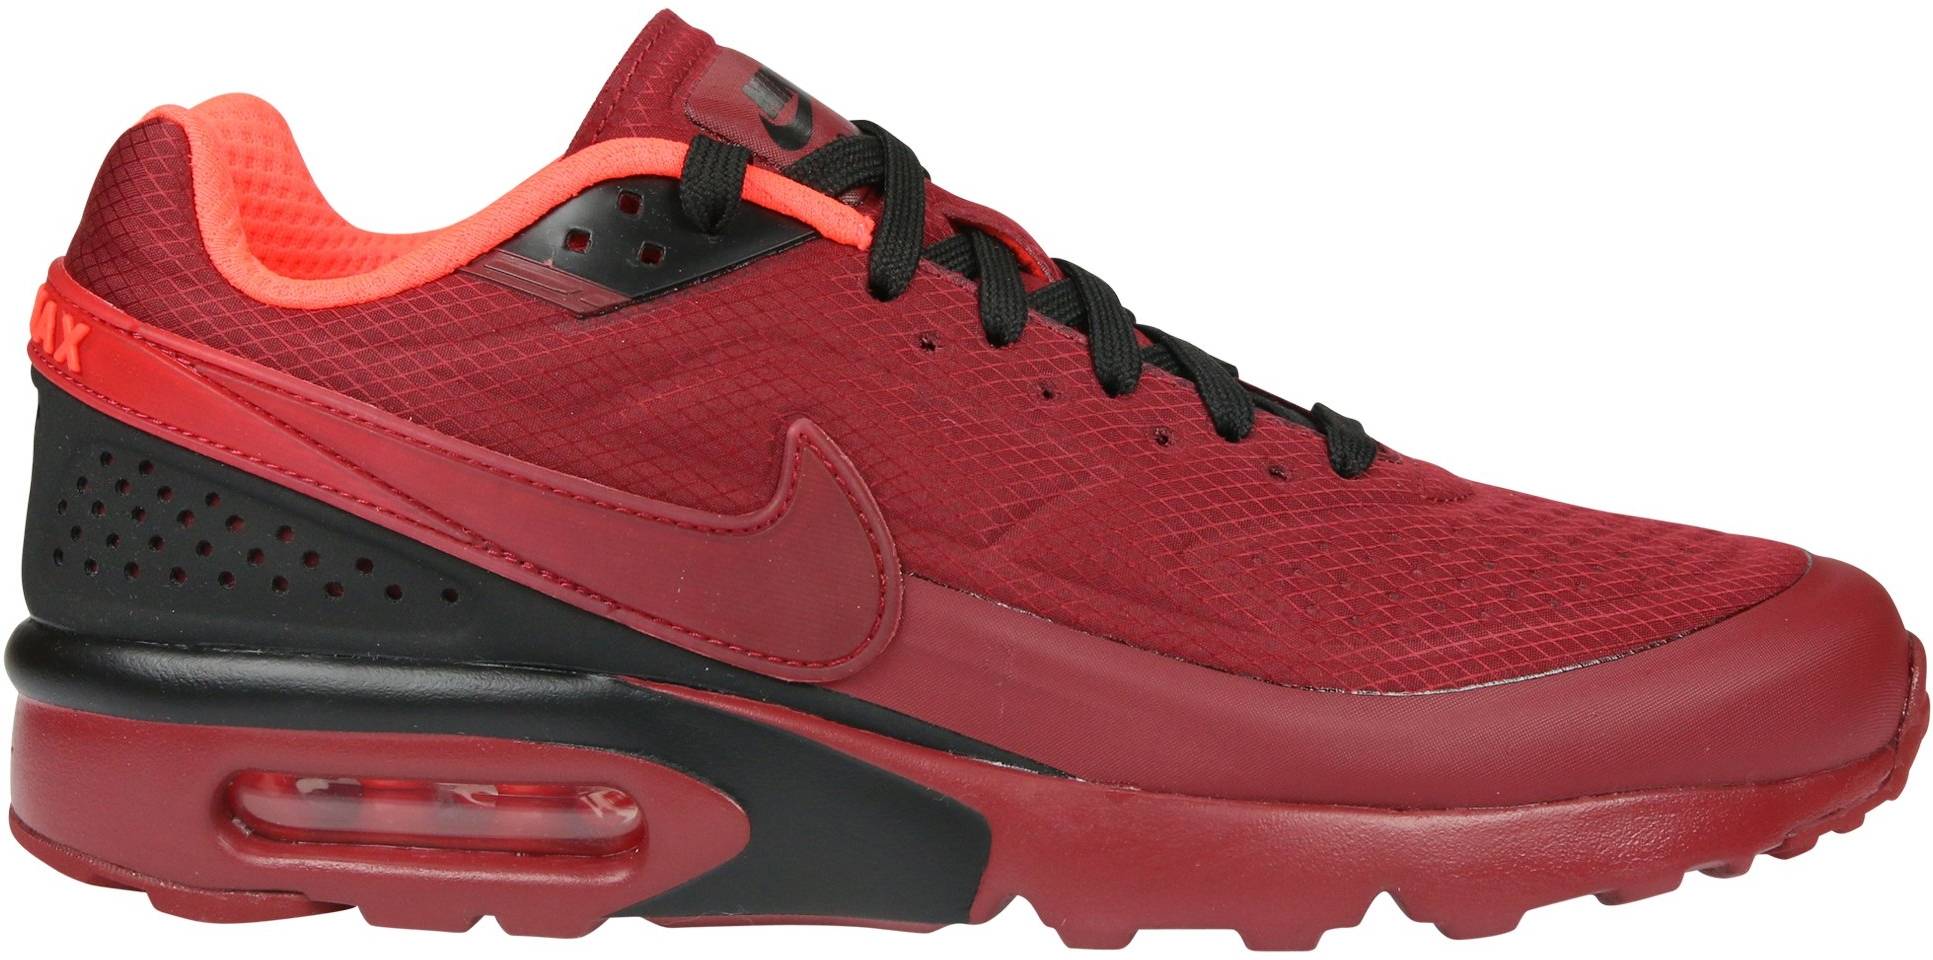 via Defile fluid Nike Air Max BW Ultra SE sneakers in red + grey | RunRepeat